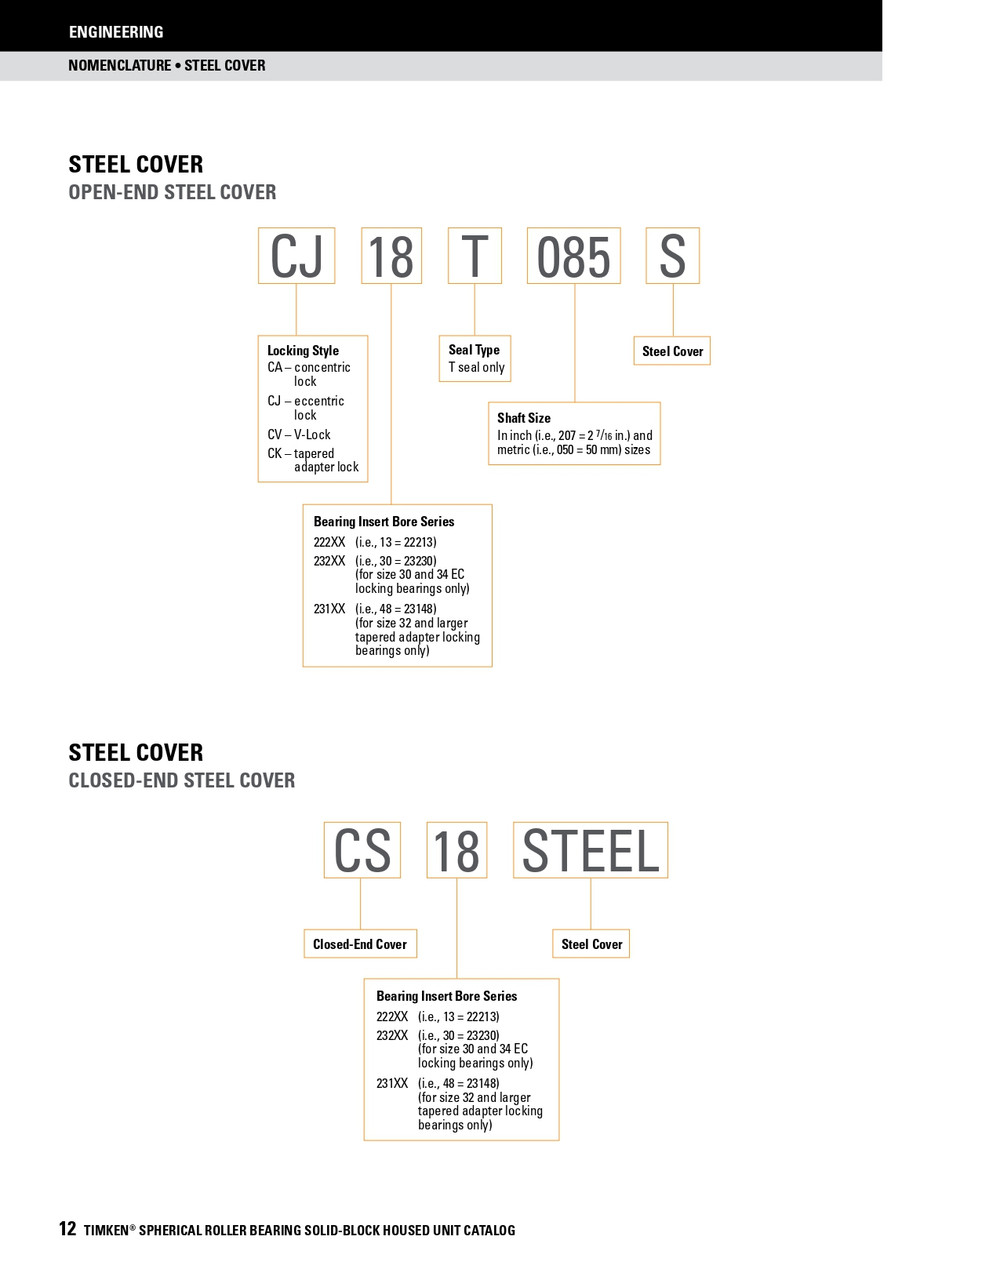 75mm Timken SRB Steel Open End Cover w/Teflon Seal - QV V-Lock® Type   CV17T075S